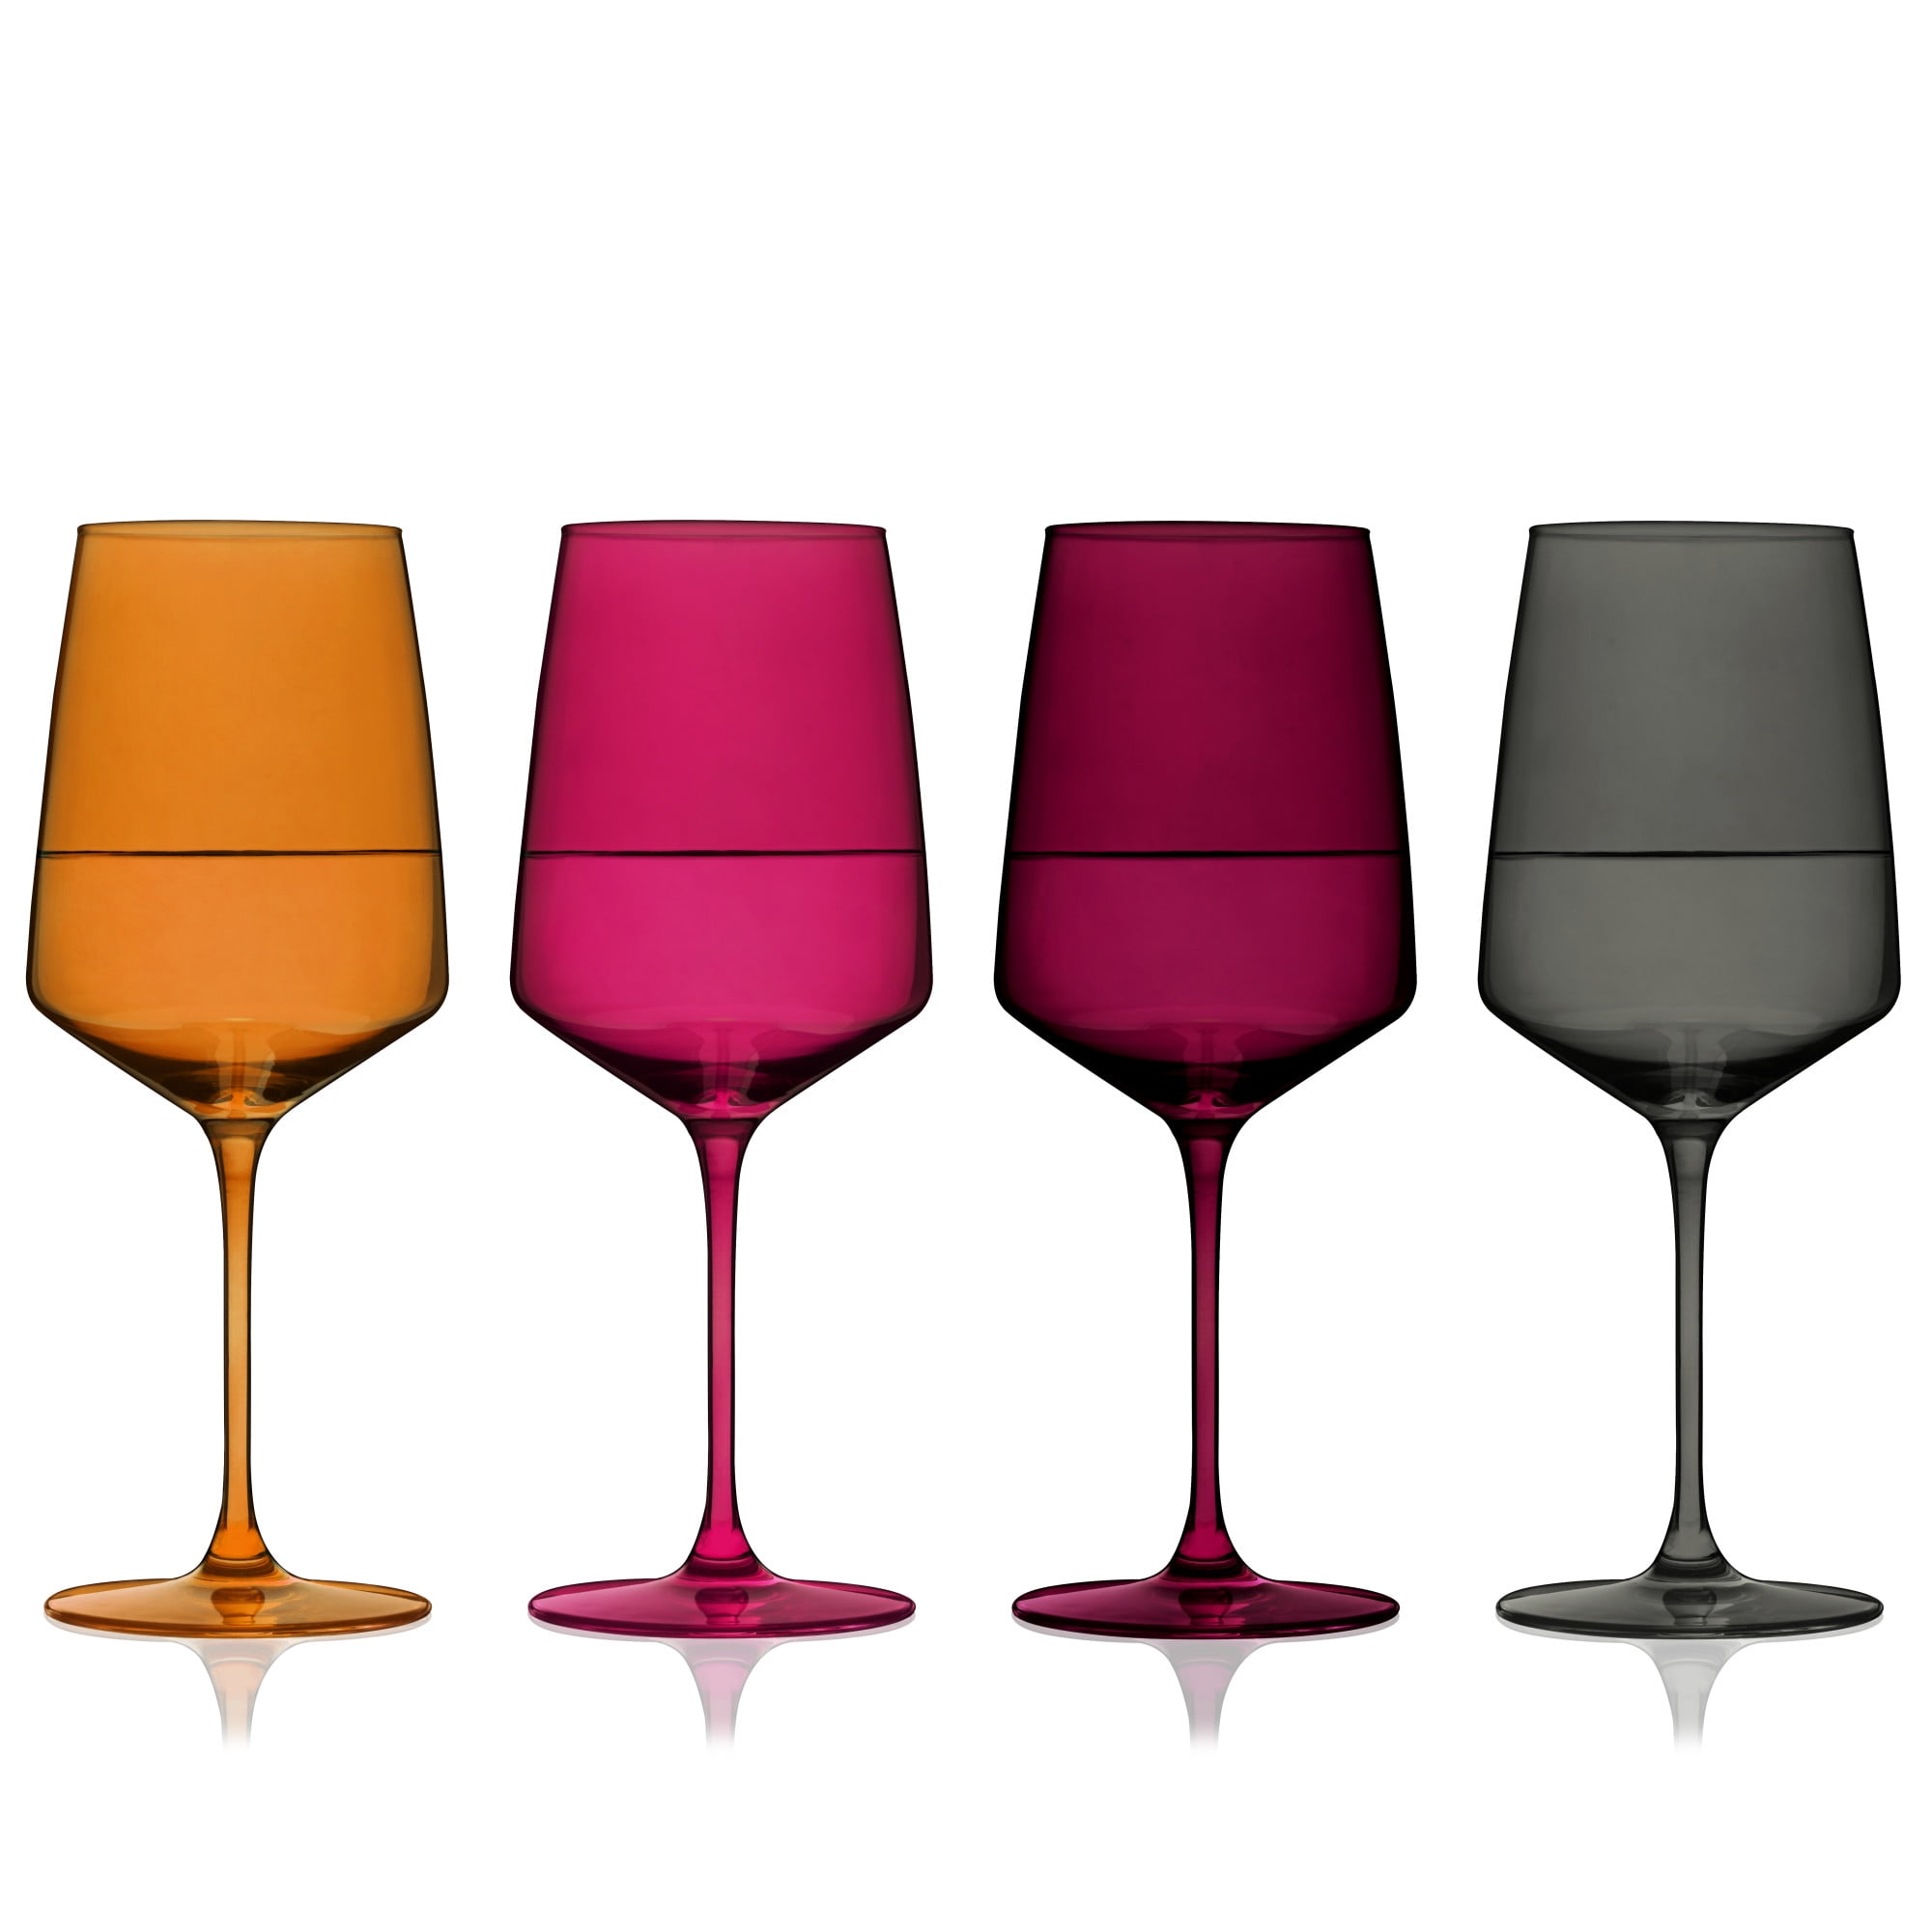 Red Wine Glasses - Crystal Big Wine Glasses set of 2,Hand Blown Long Stem  Wine Glasses – Large Wine Glass for Pinot Noir, Burgundy – Gift-Box for